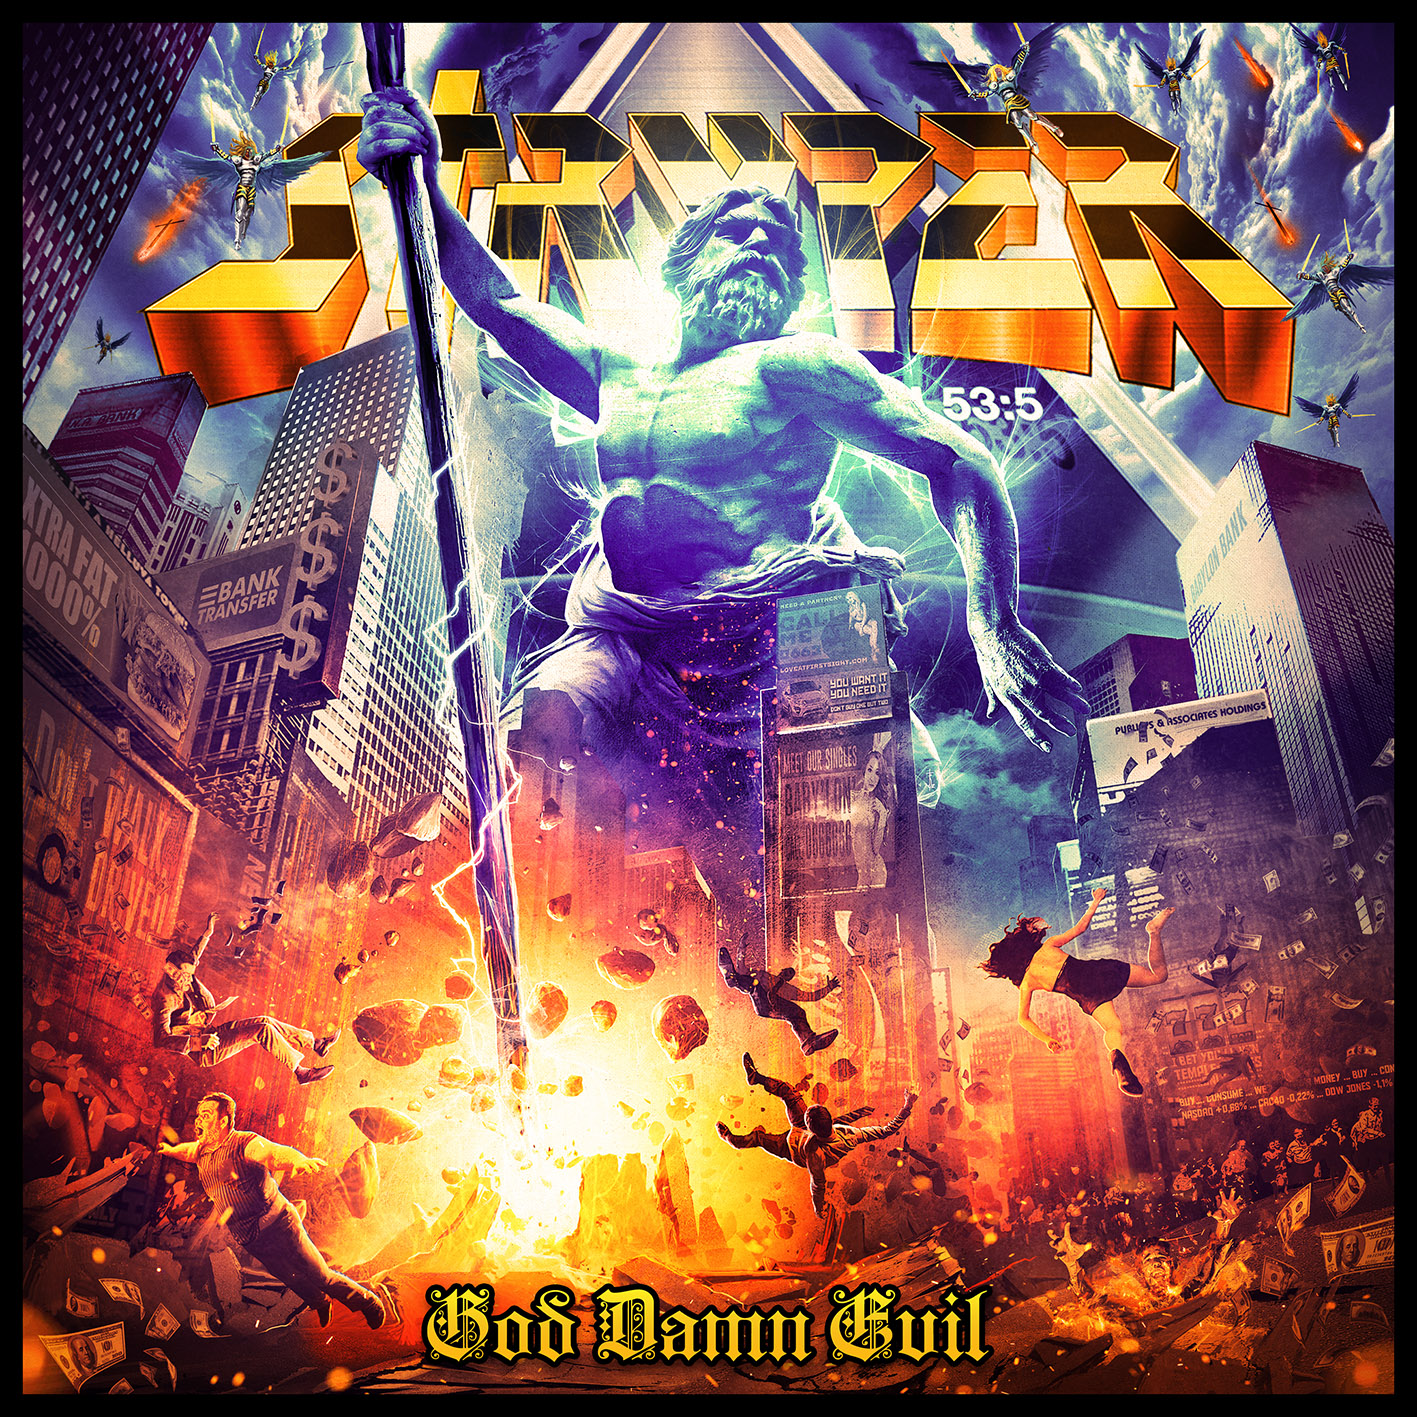 STRYPER, "God Damn Evil" (Frontiers Music SRL) - Available April 20, 2018